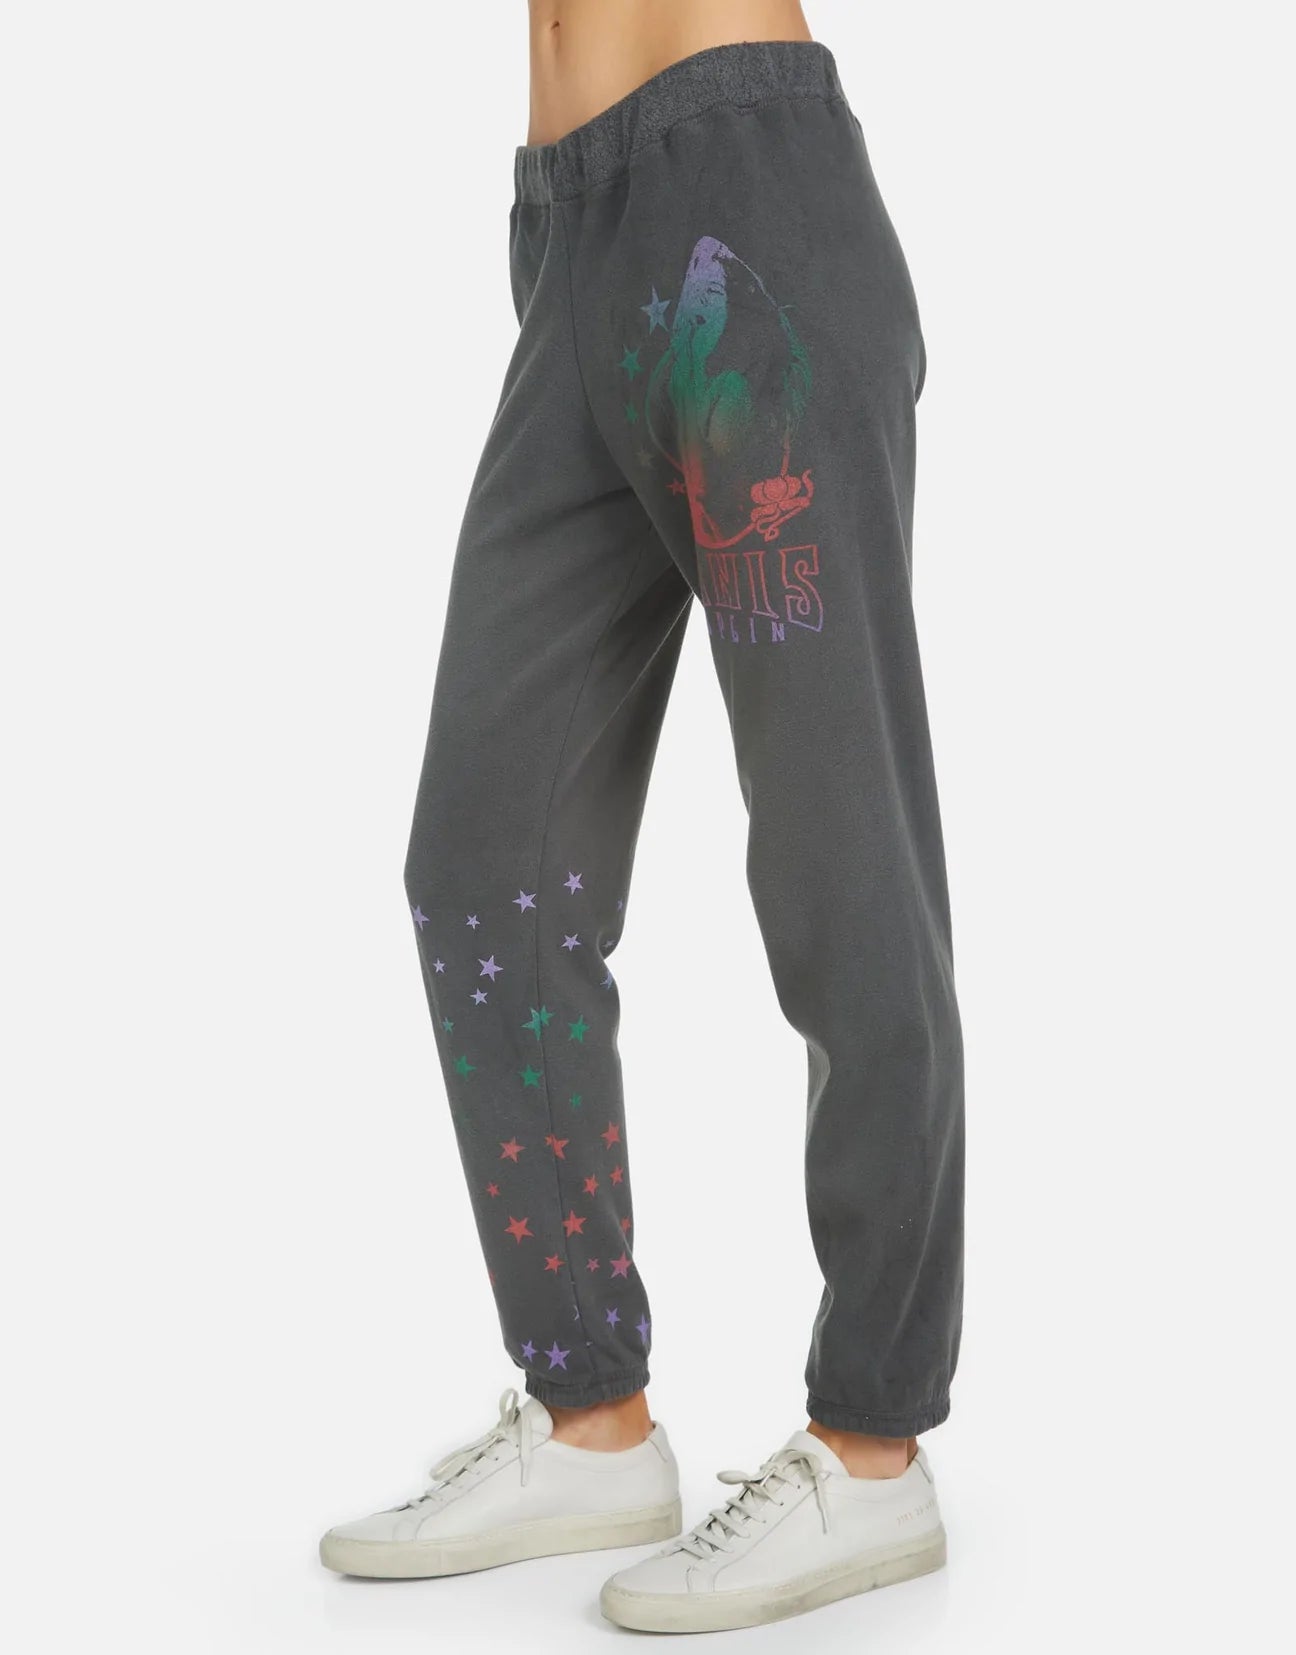 Shop Lauren Moshi Gia Janis Joplin Jogger Pants - Premium Jogging Pants from Lauren Moshi Online now at Spoiled Brat 